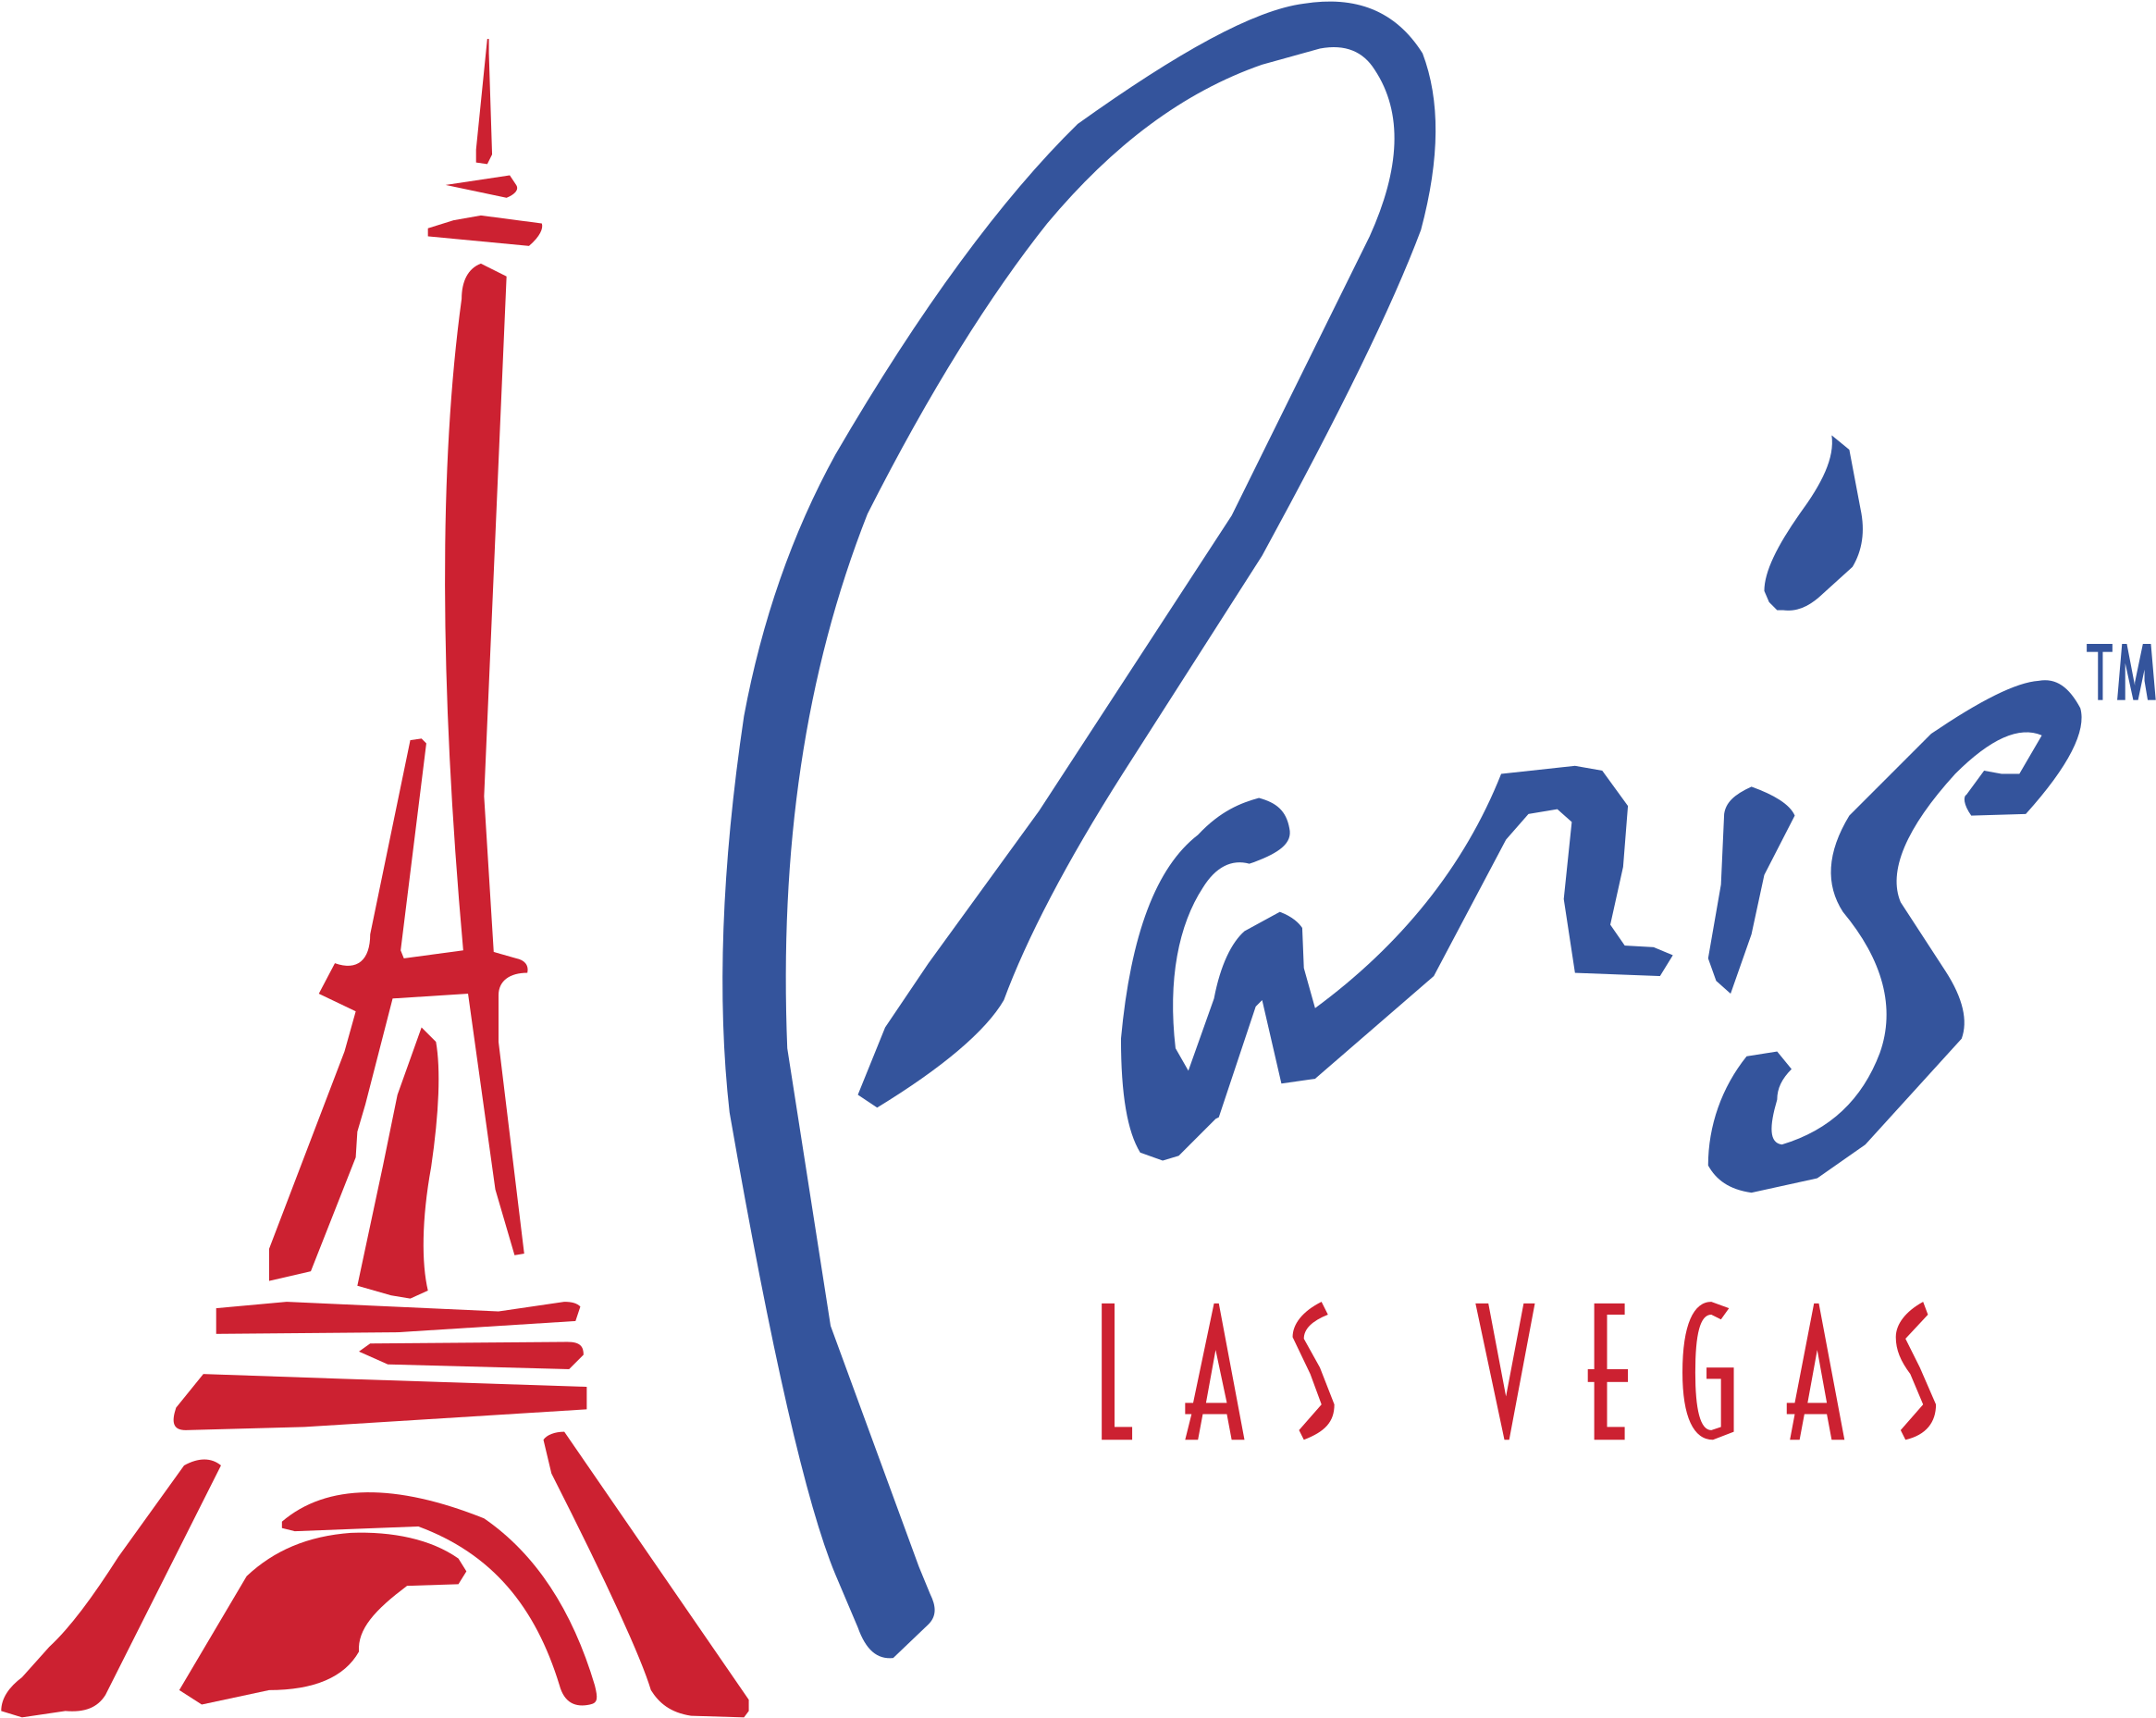 Paris Logo Black And White - Paris Las Vegas (2400x2400)